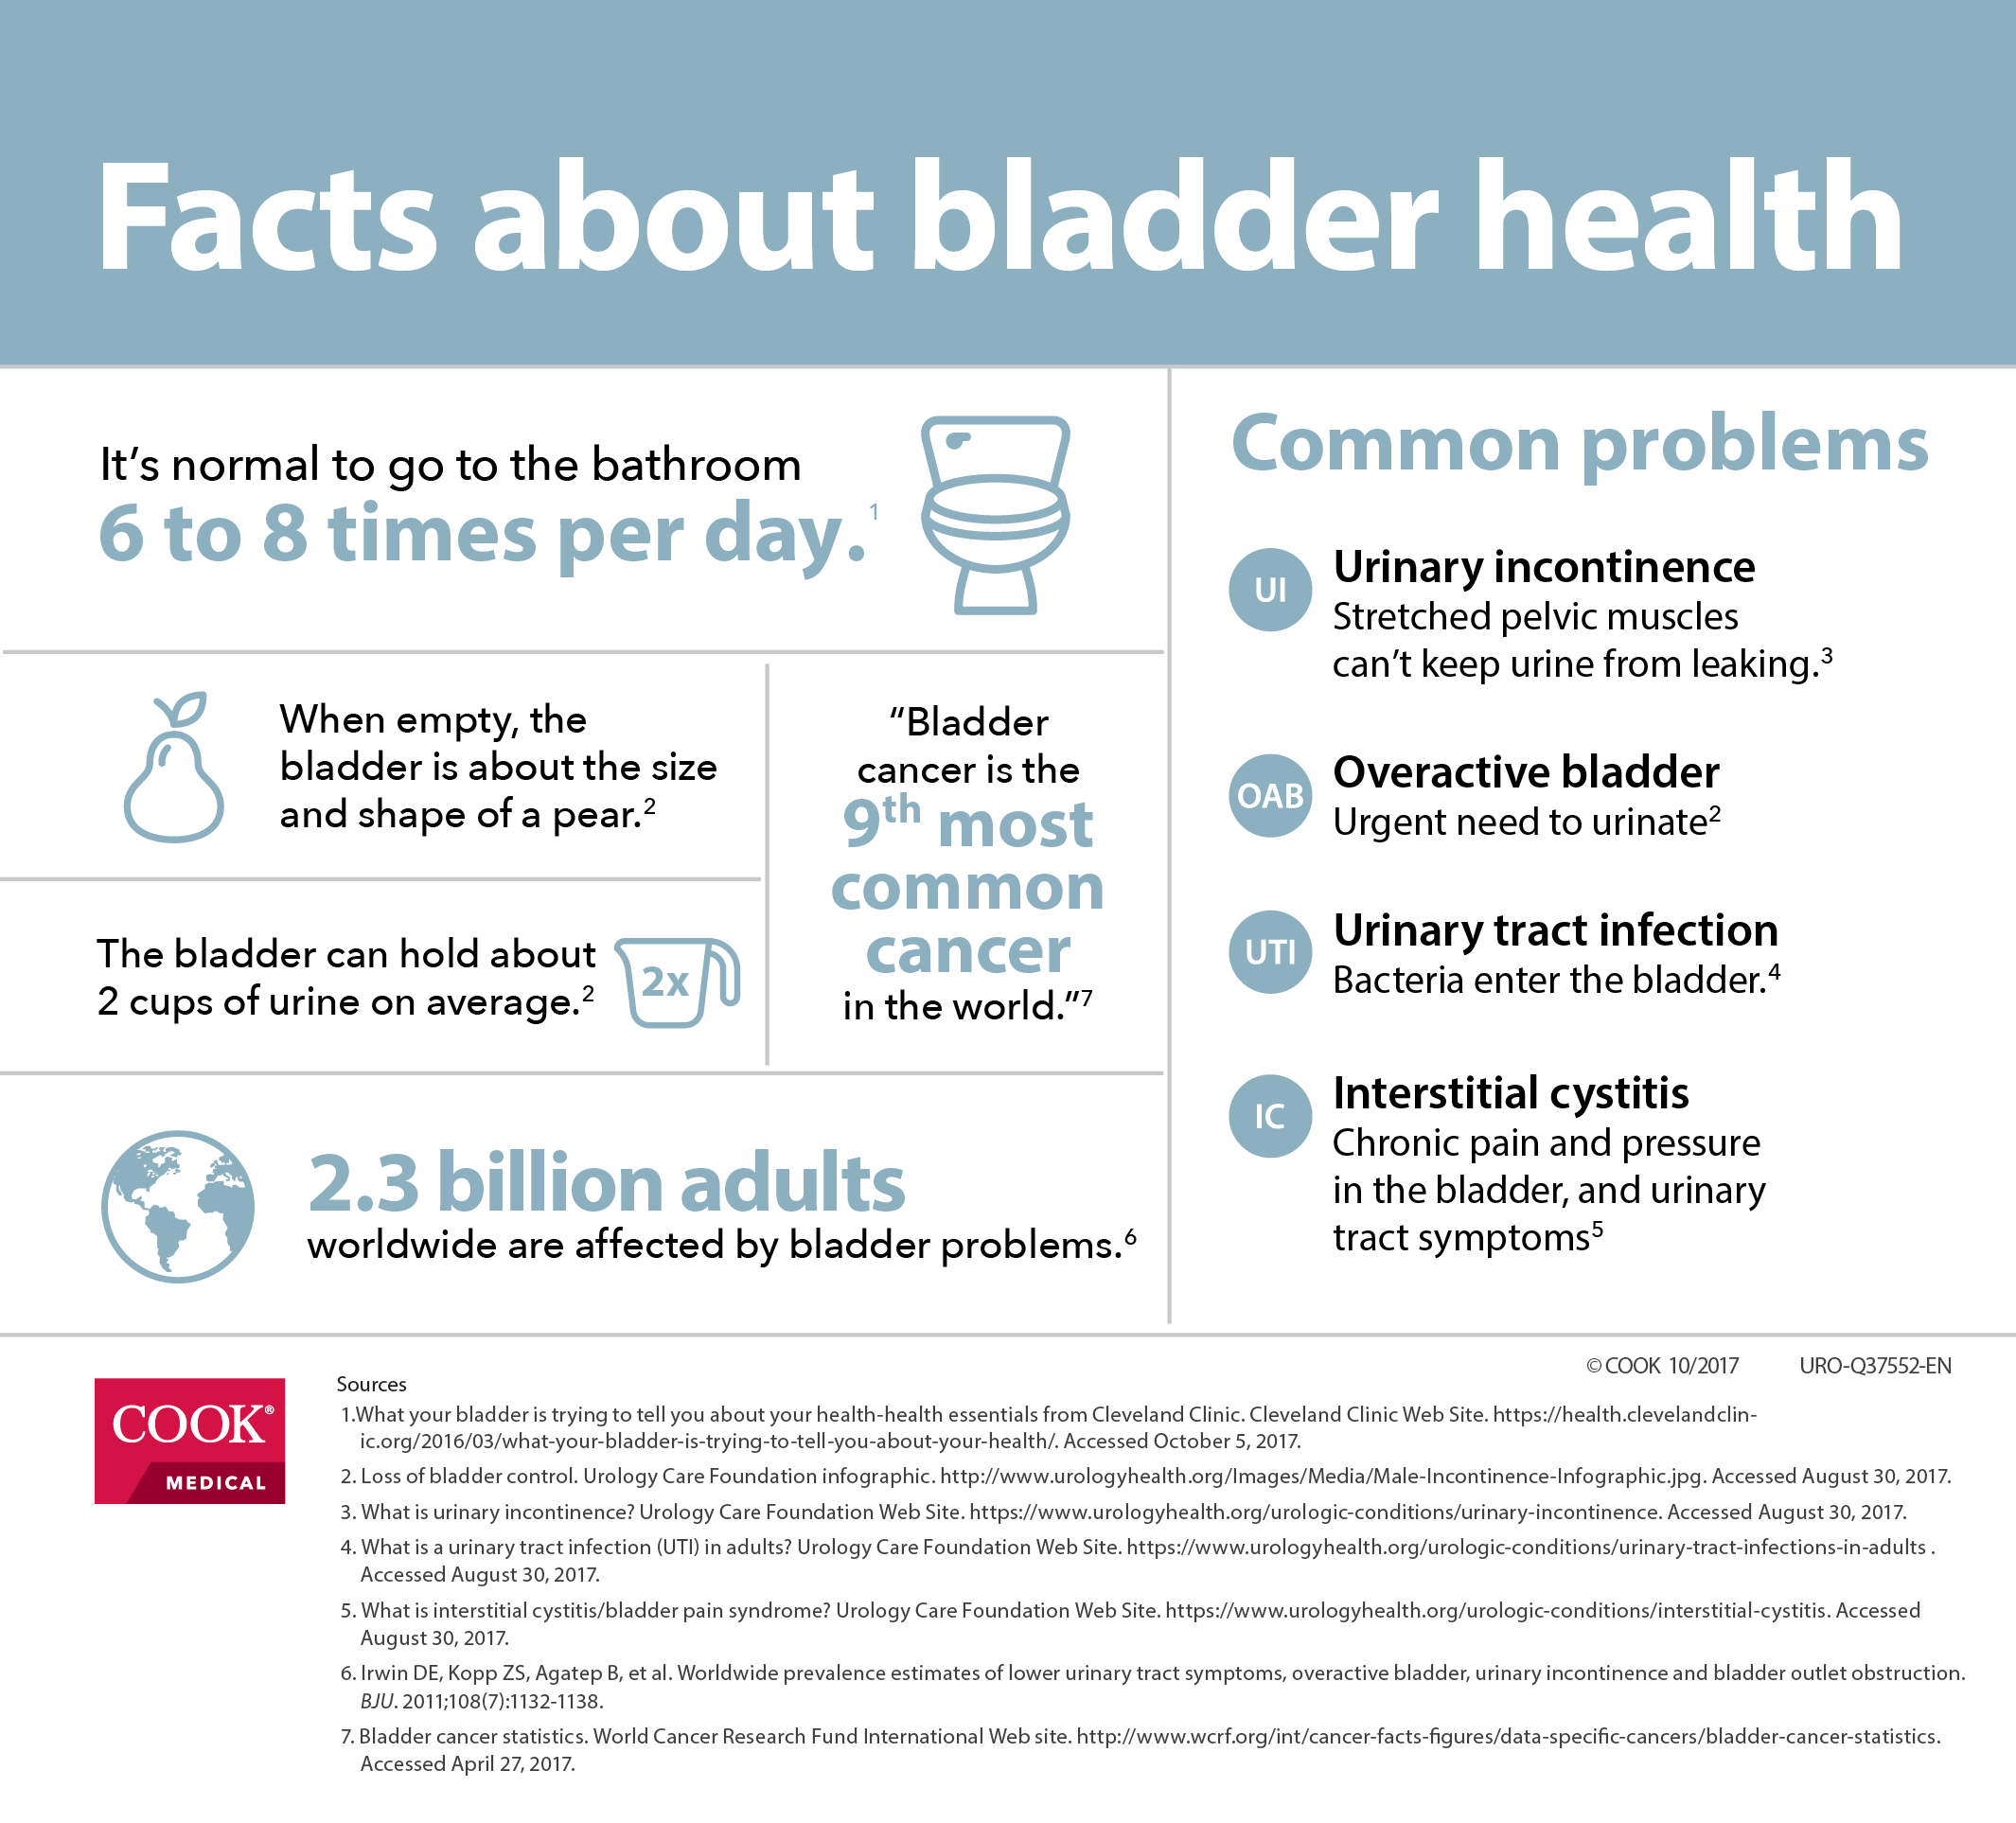 Healthy bladder habits